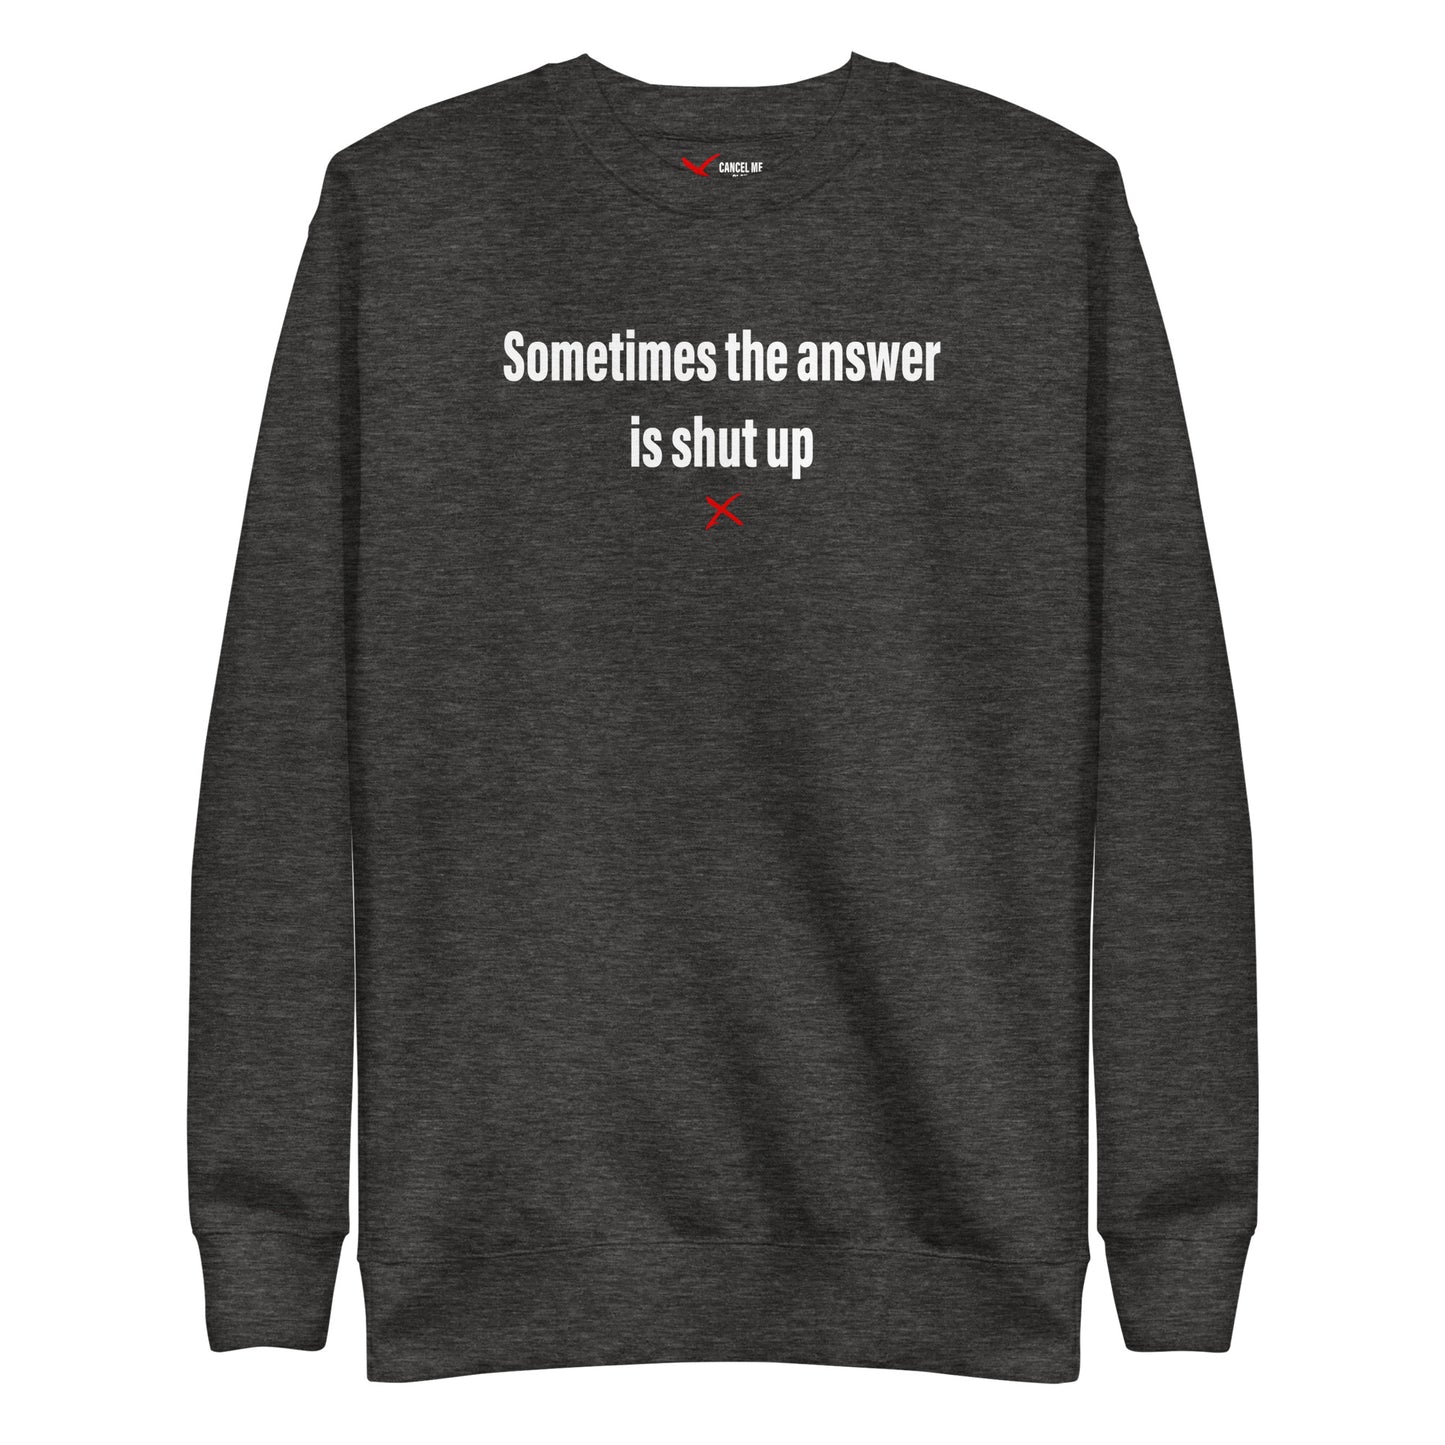 Sometimes the answer is shut up - Sweatshirt